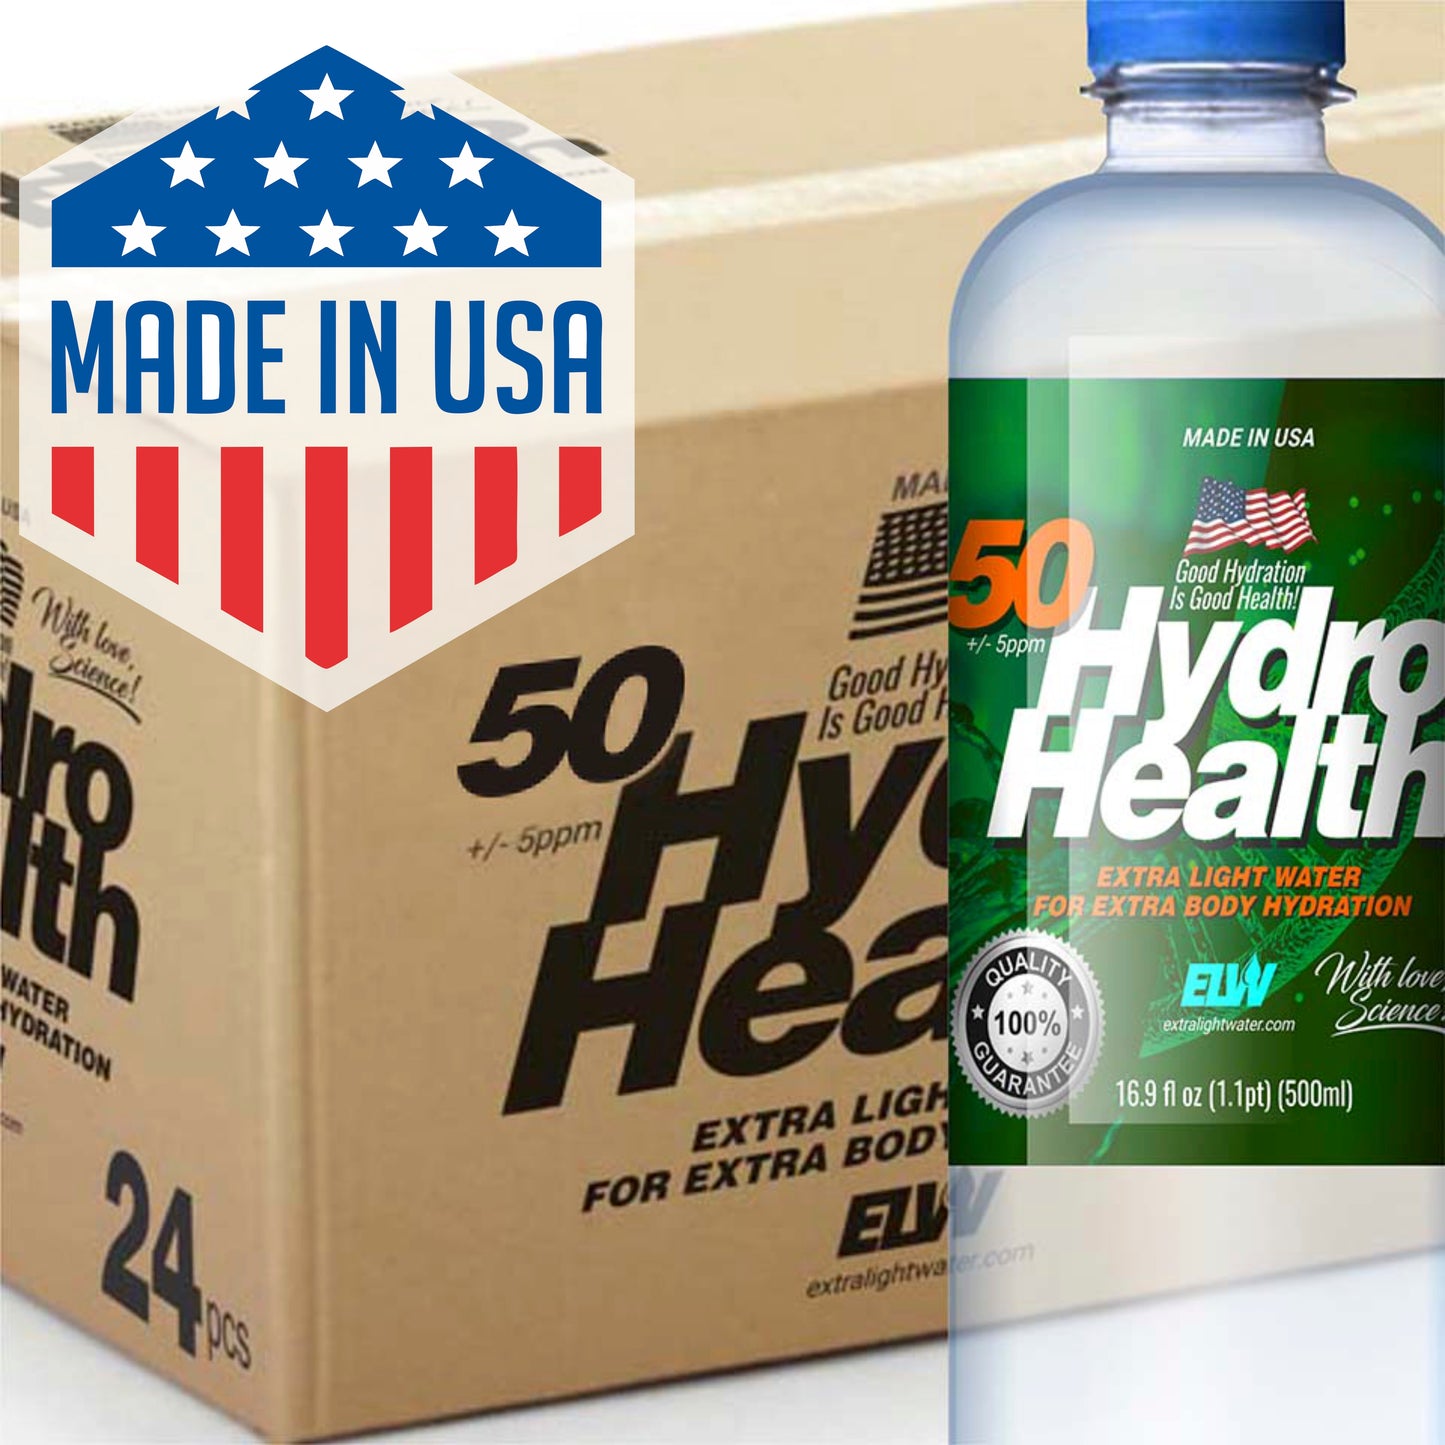 50 ppm Hydro Health (24 bottles x 500ml Box) $145 incl.S&H-no PO box